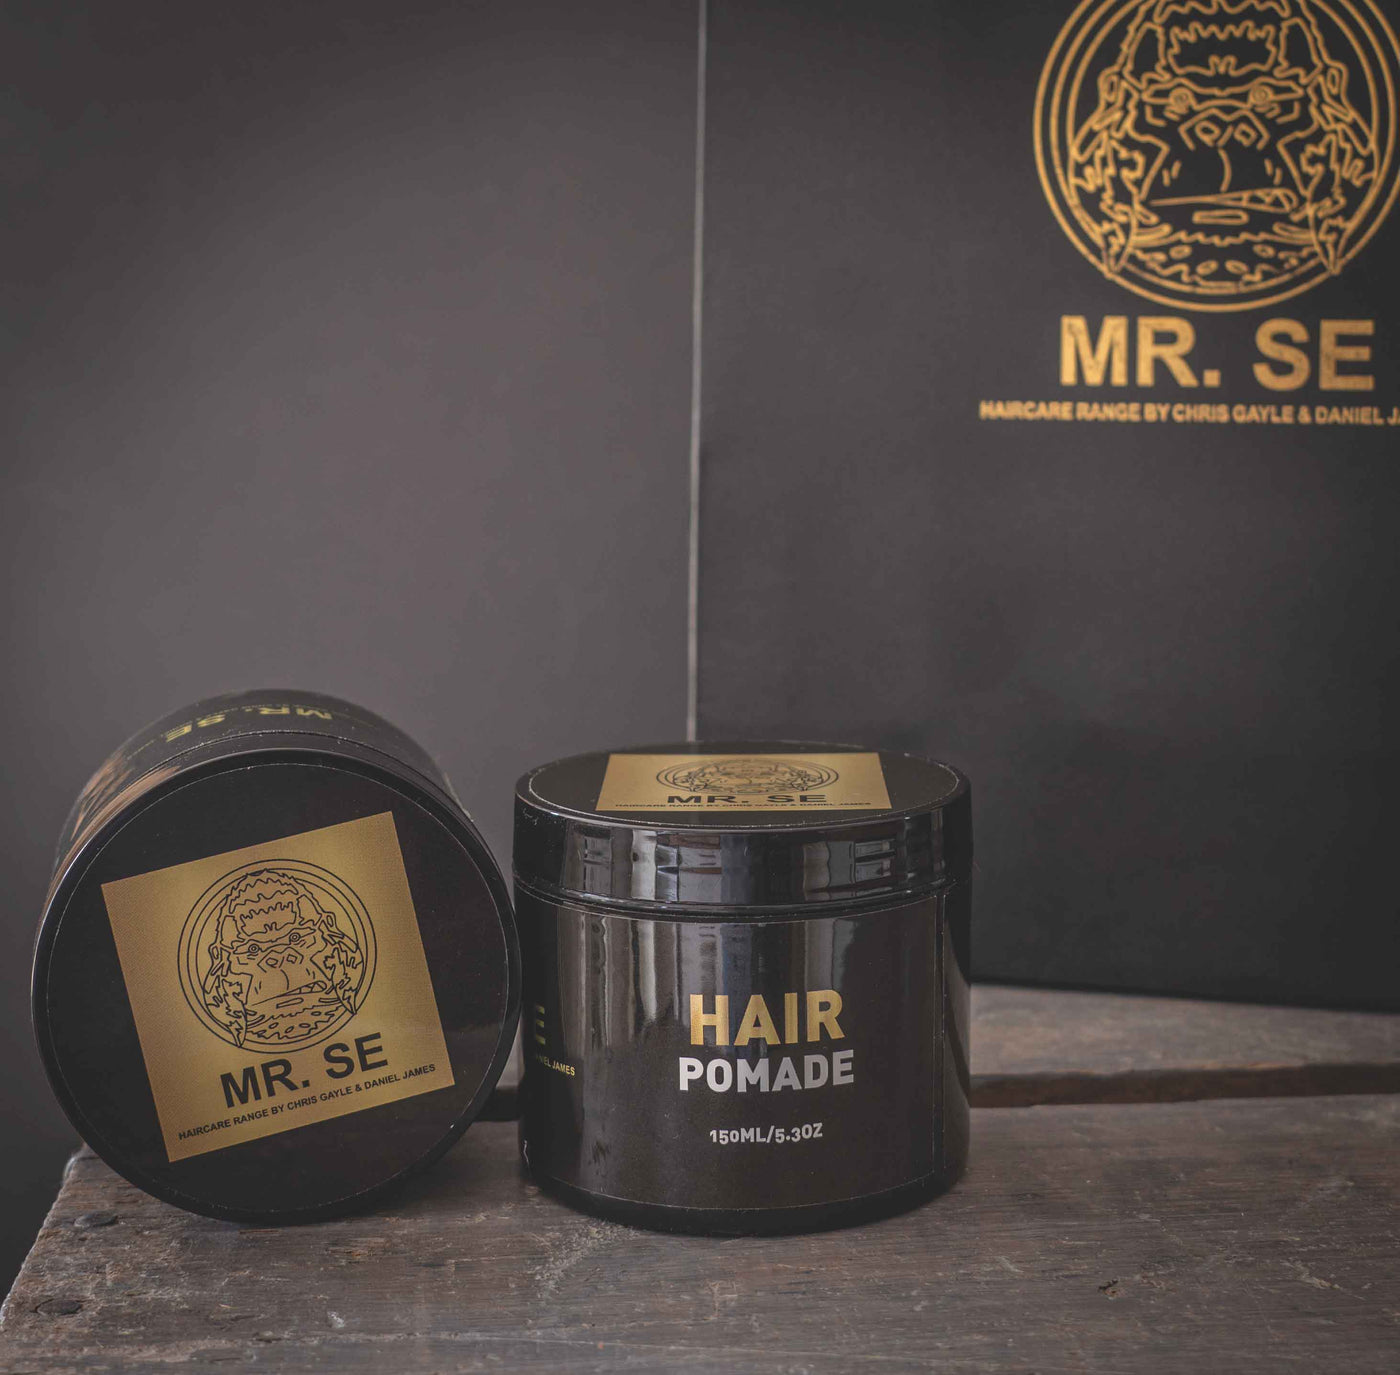 Sea Salt Spray Hair Product by Mr. SE - MR.SE